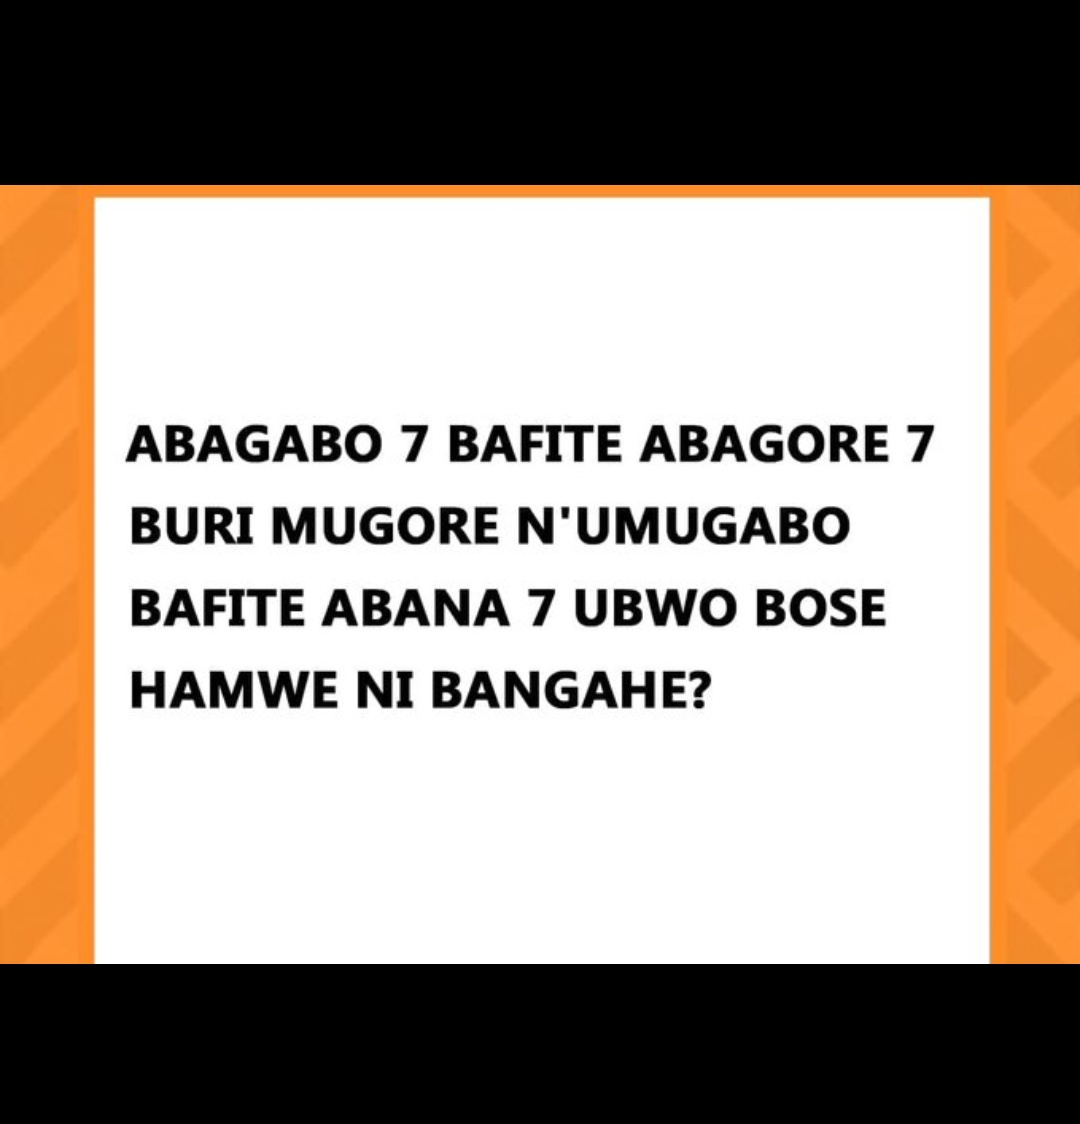 Bose hamwe nibangahe????!